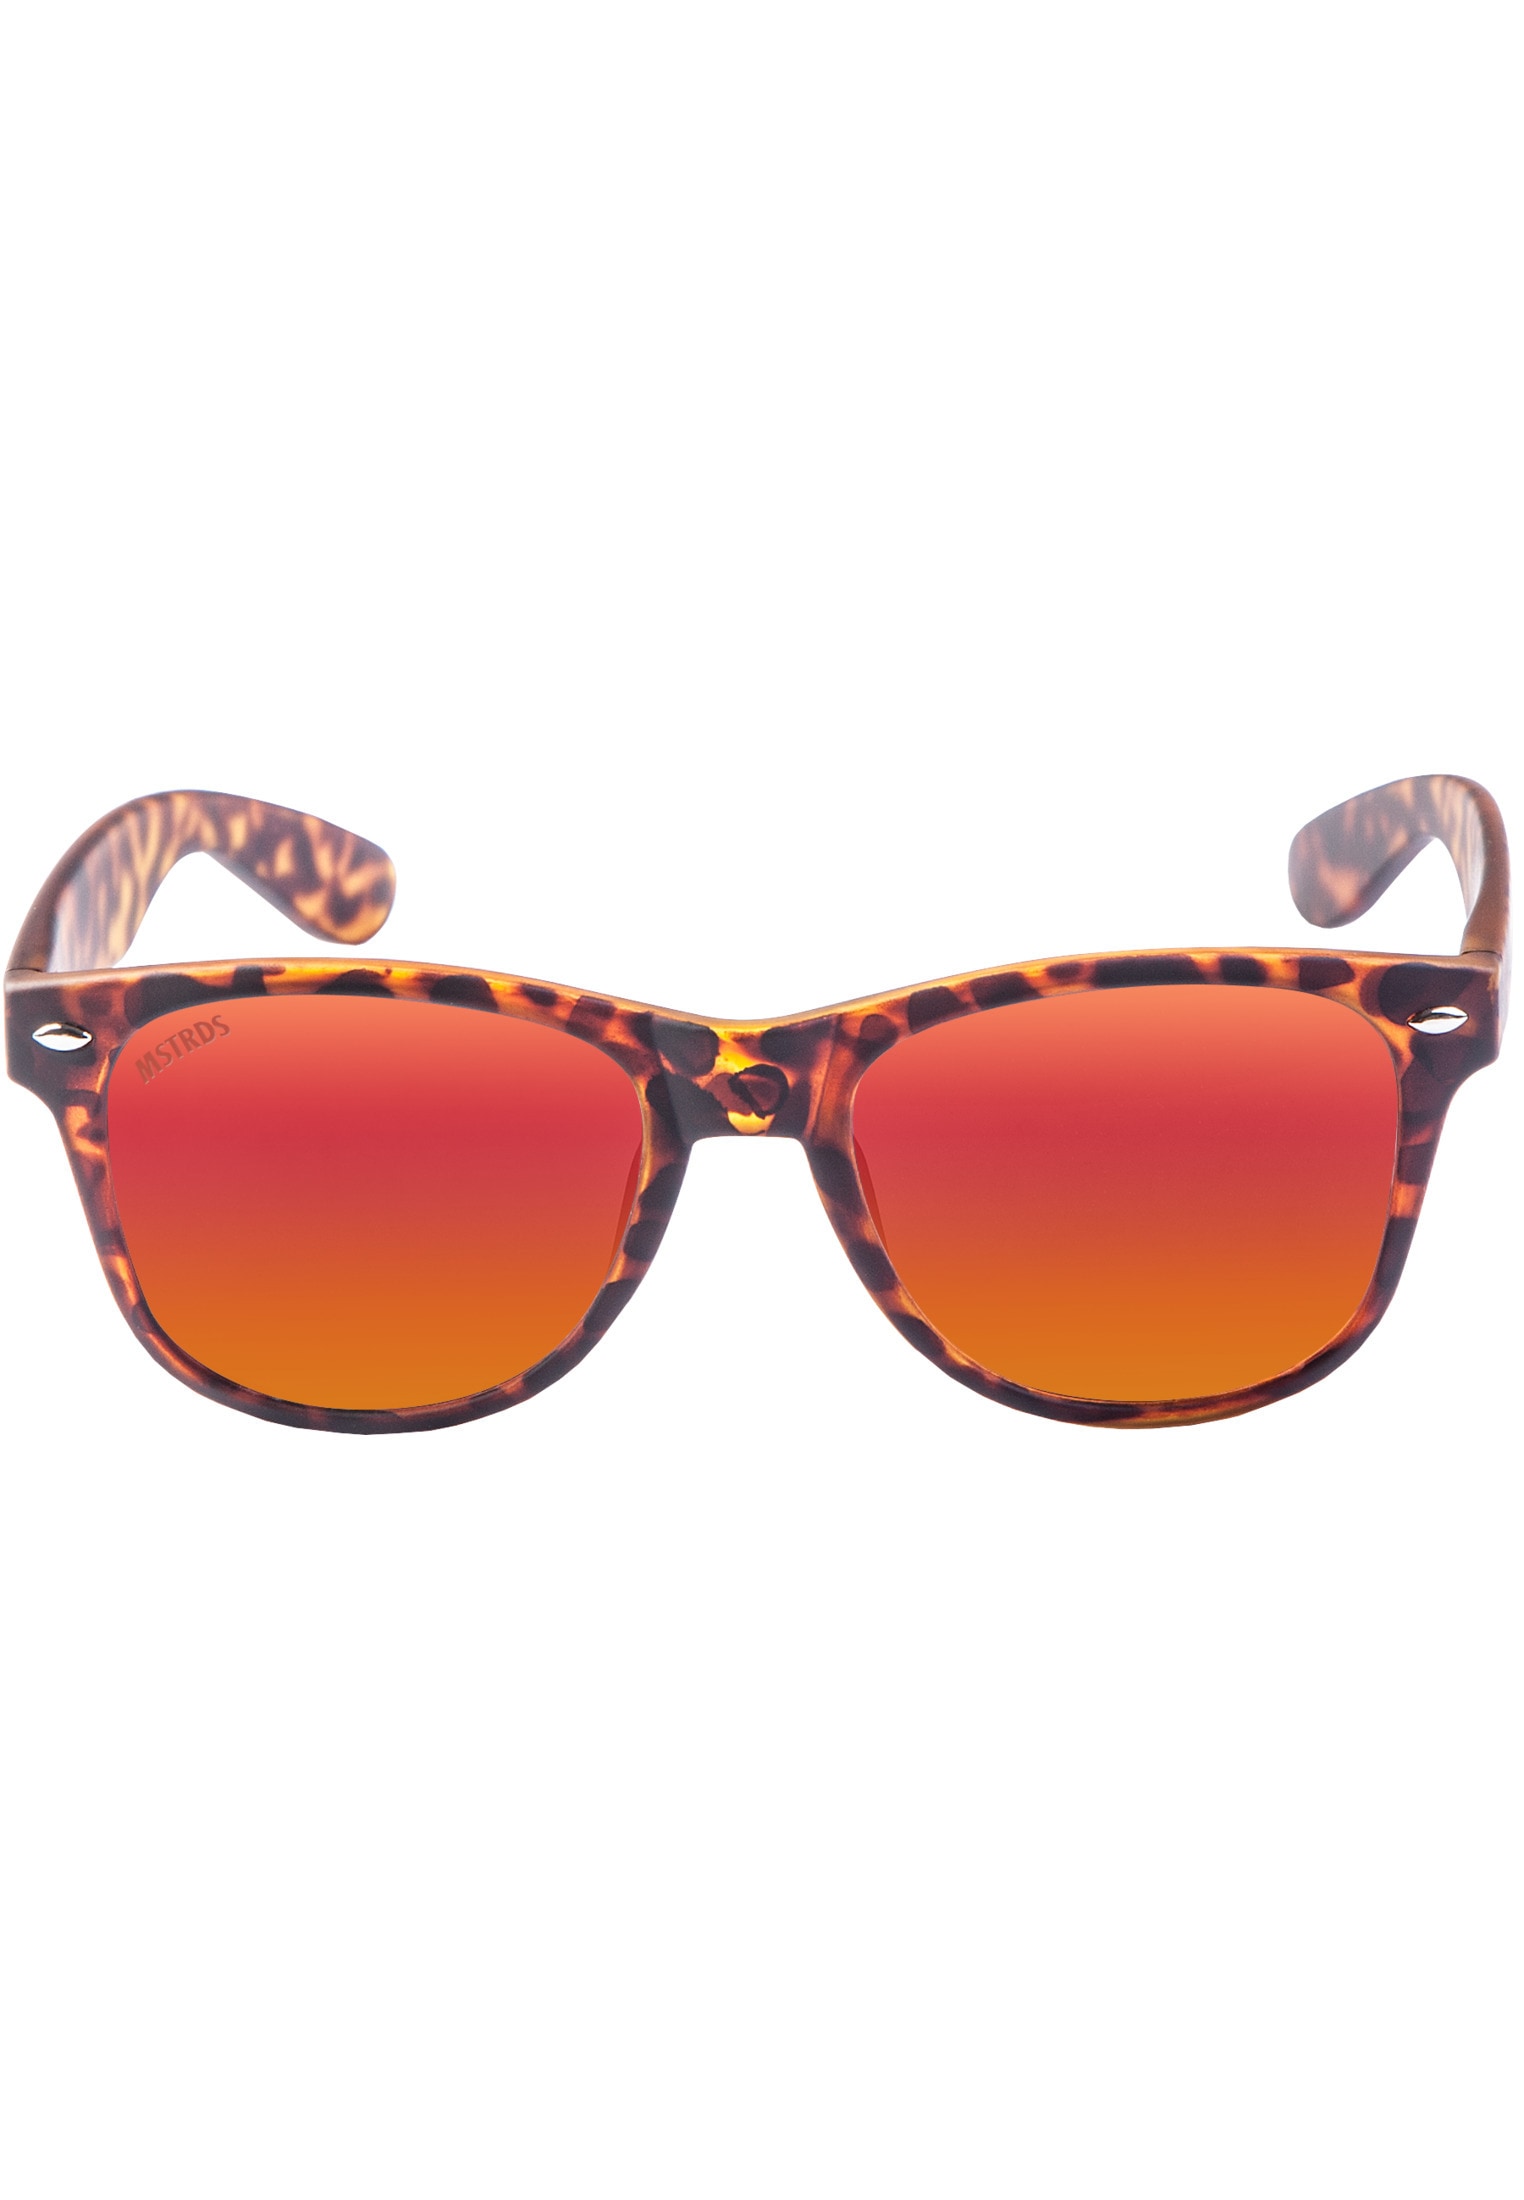 MSTRDS Sonnenbrille »Accessoires Sunglasses Likoma Youth« online kaufen |  I'm walking